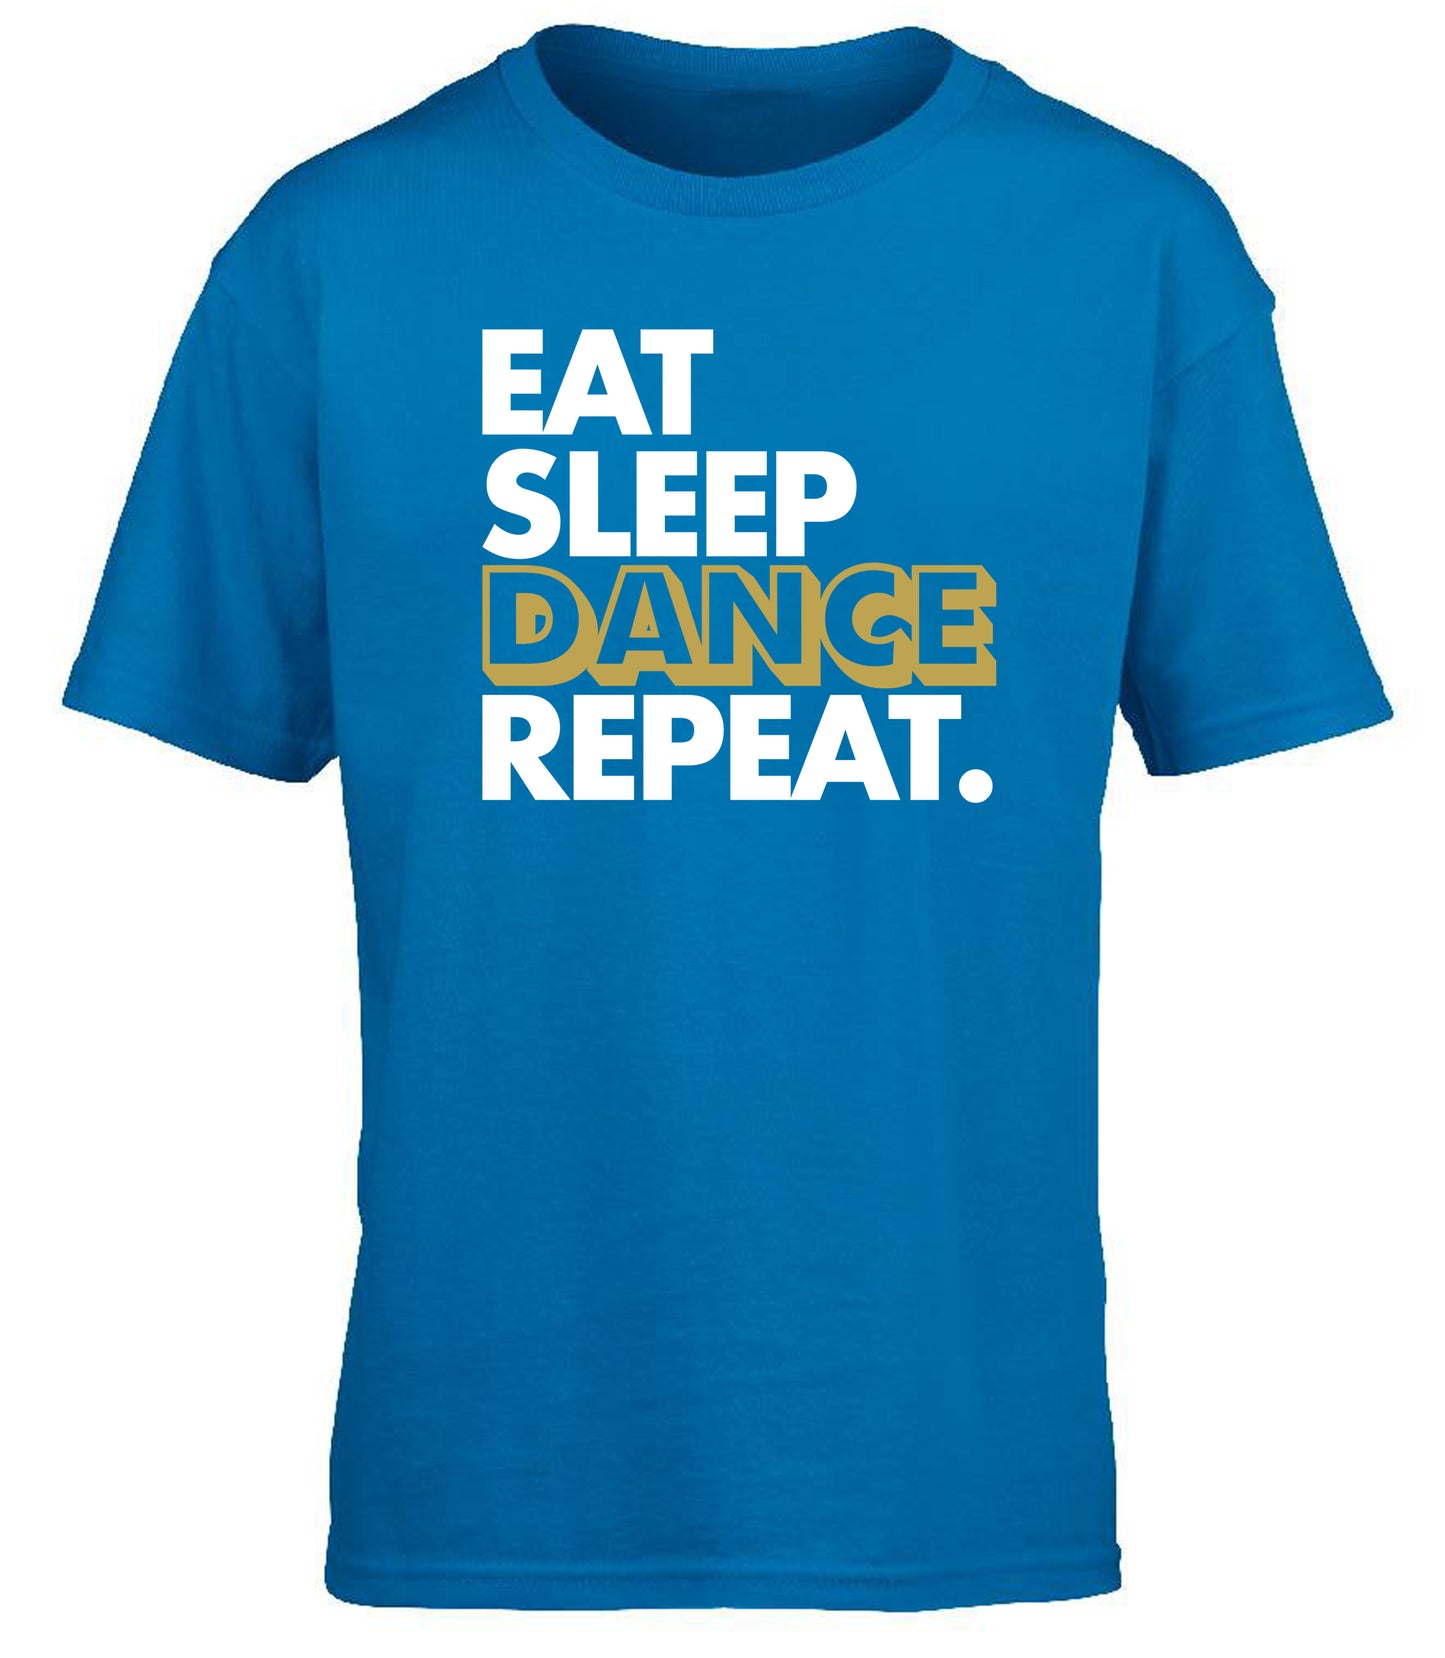 Eat Sleep Dance Repeat children's T-shirt